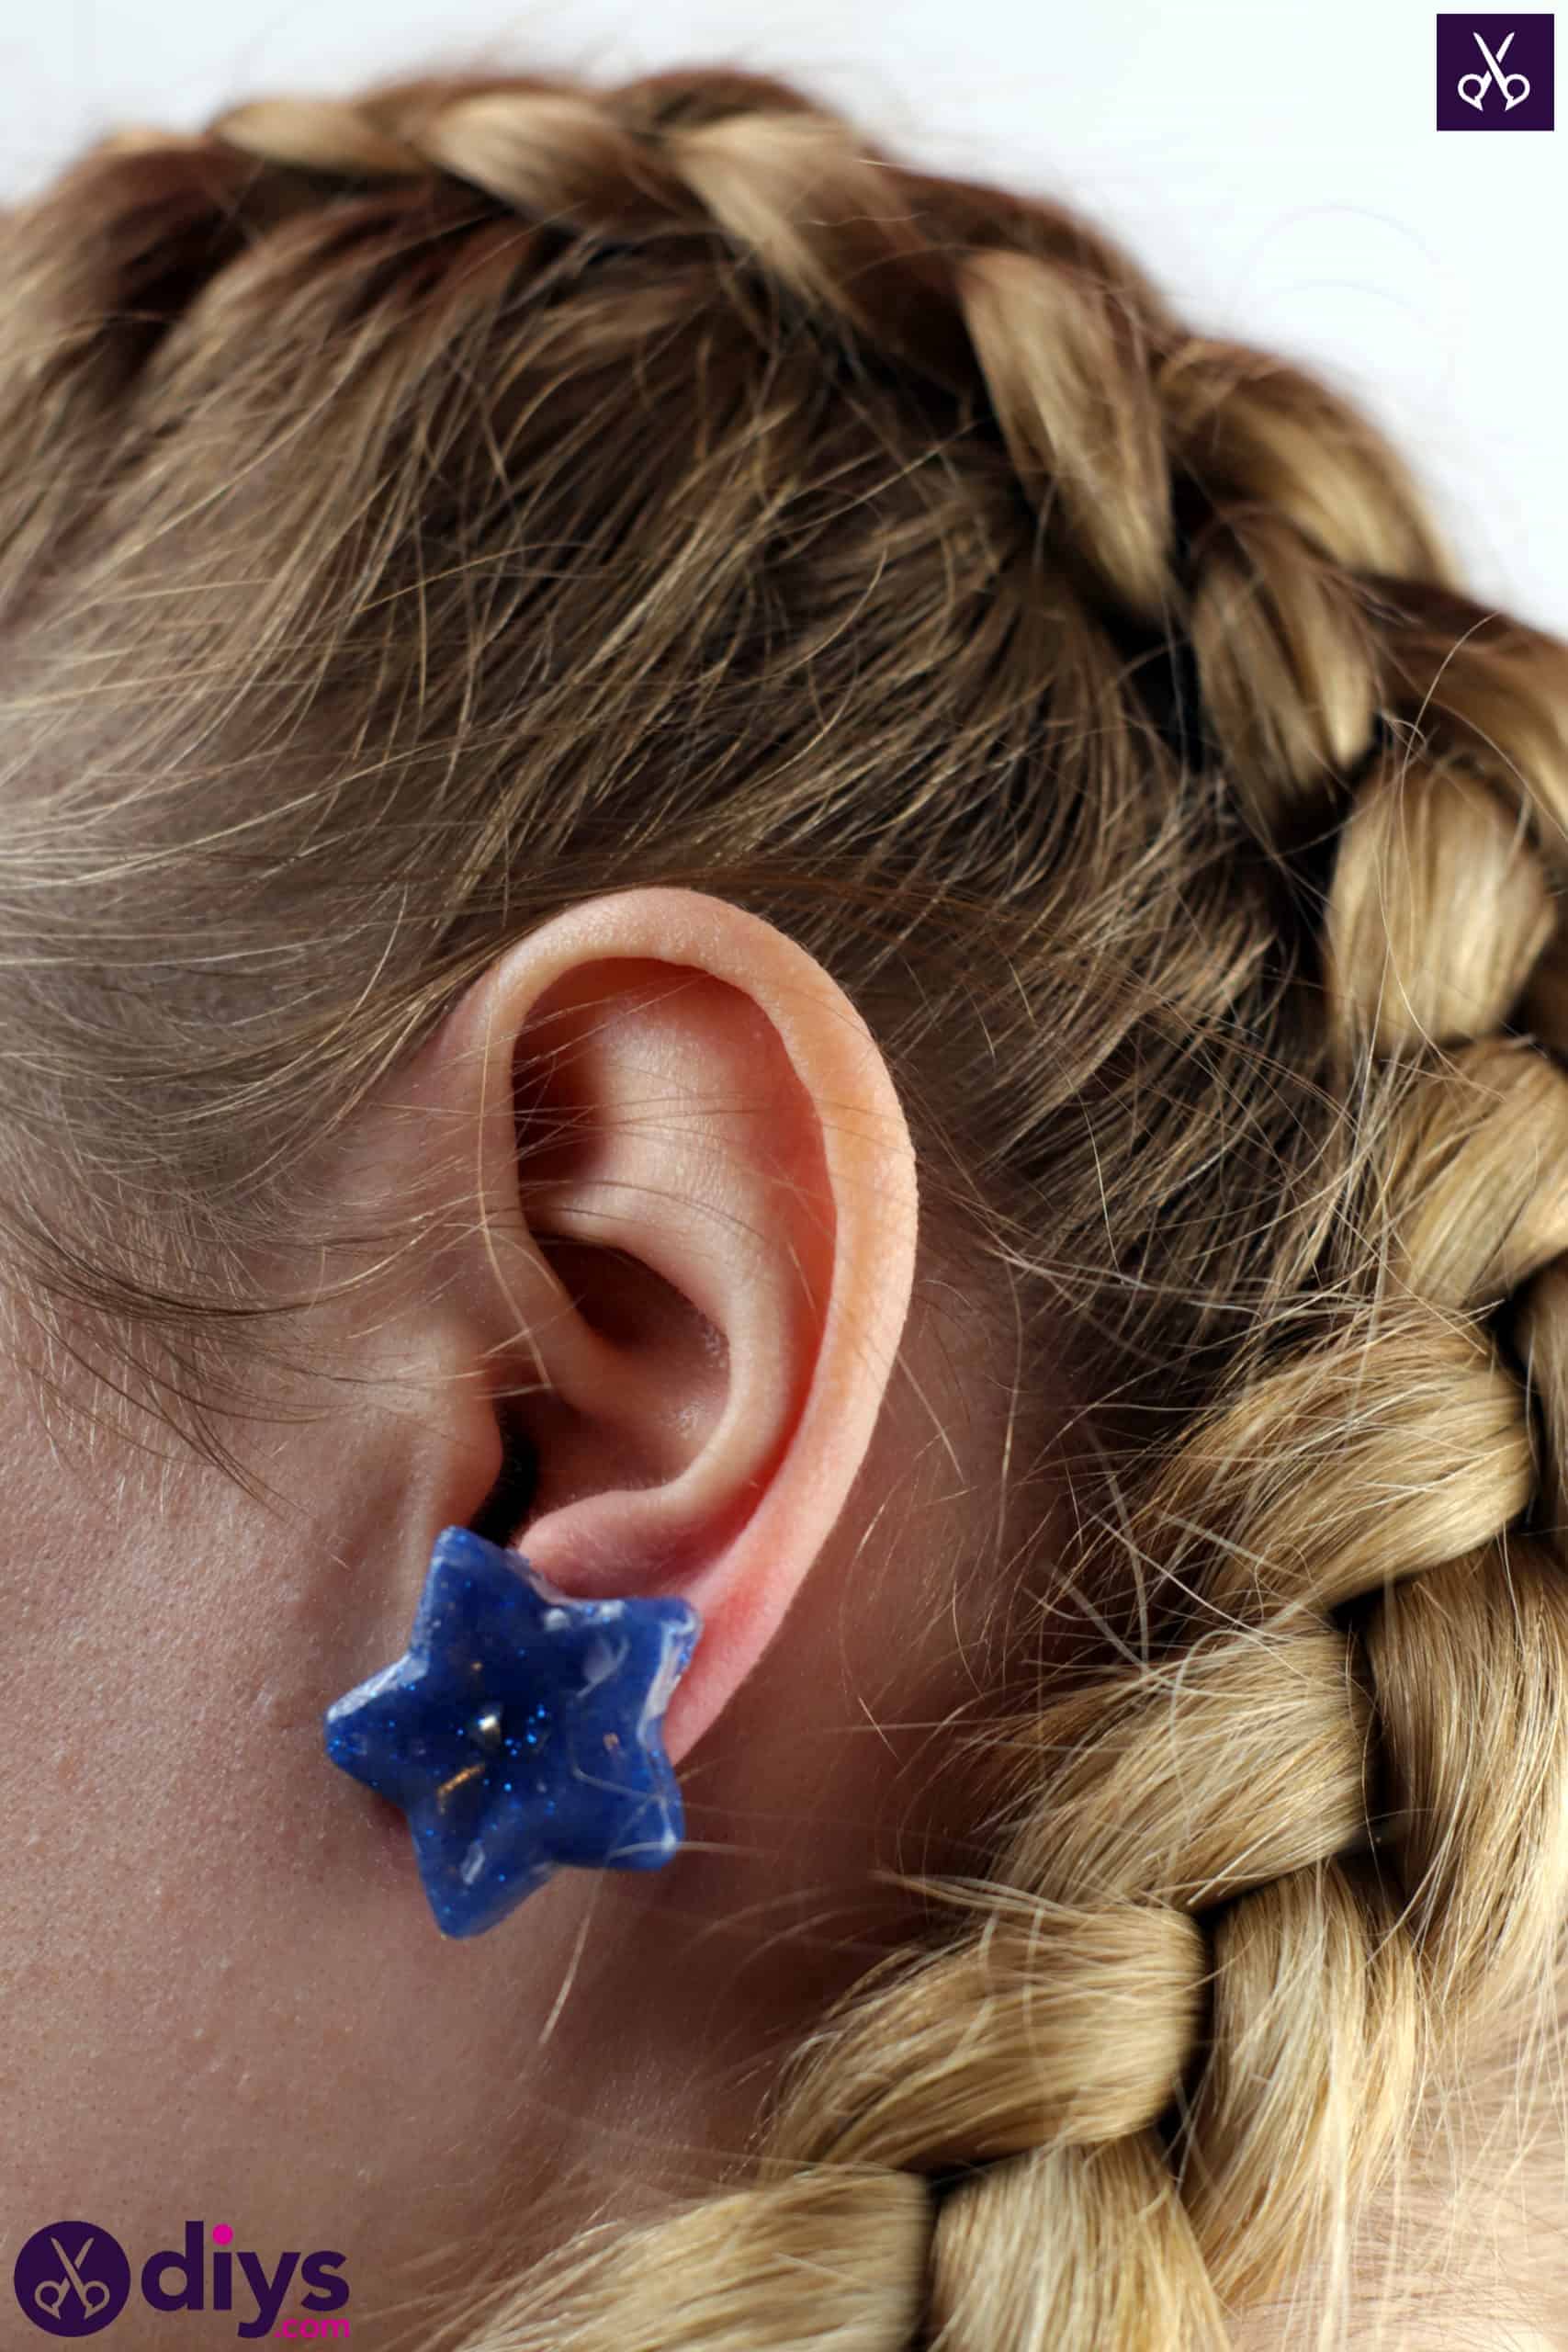 Diy hot glue star earrings project